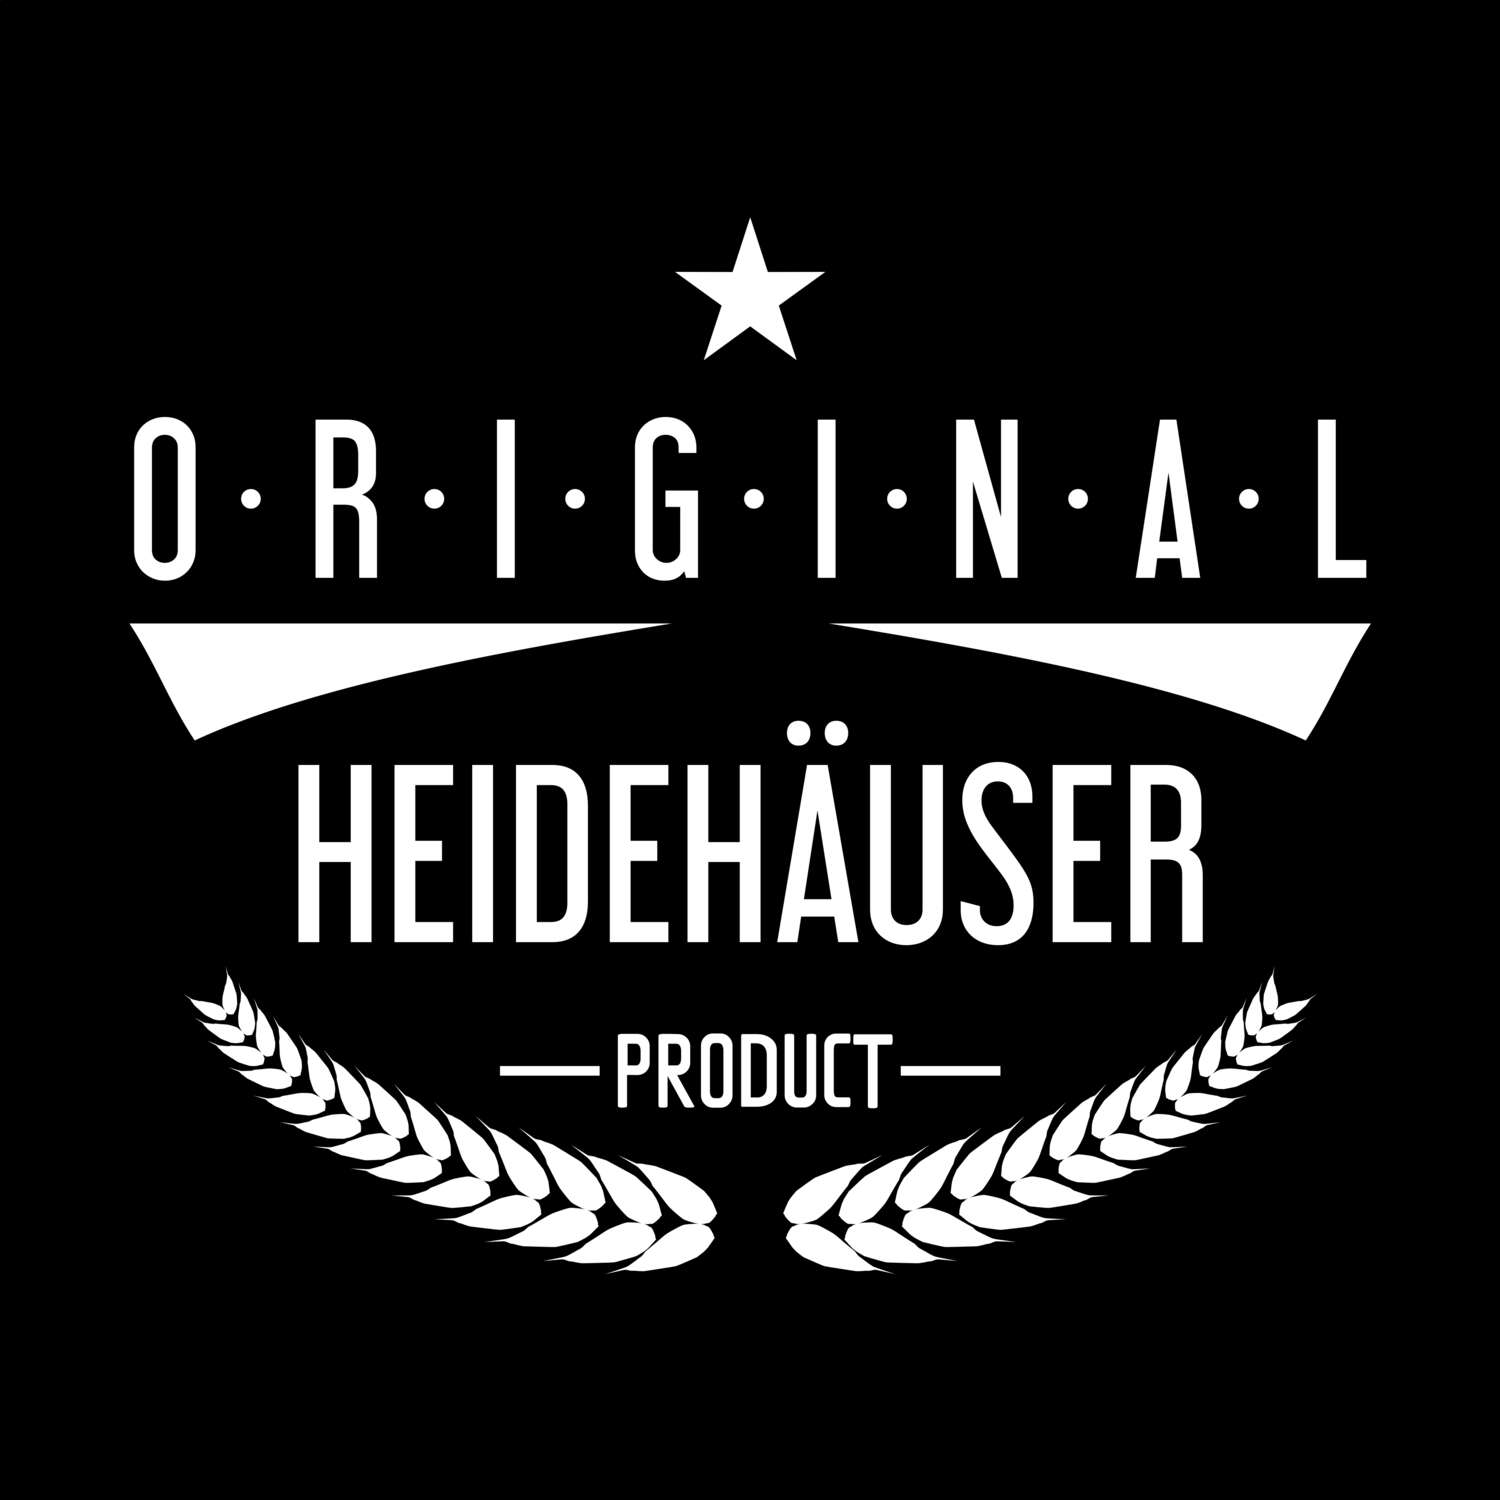 Heidehäuser T-Shirt »Original Product«